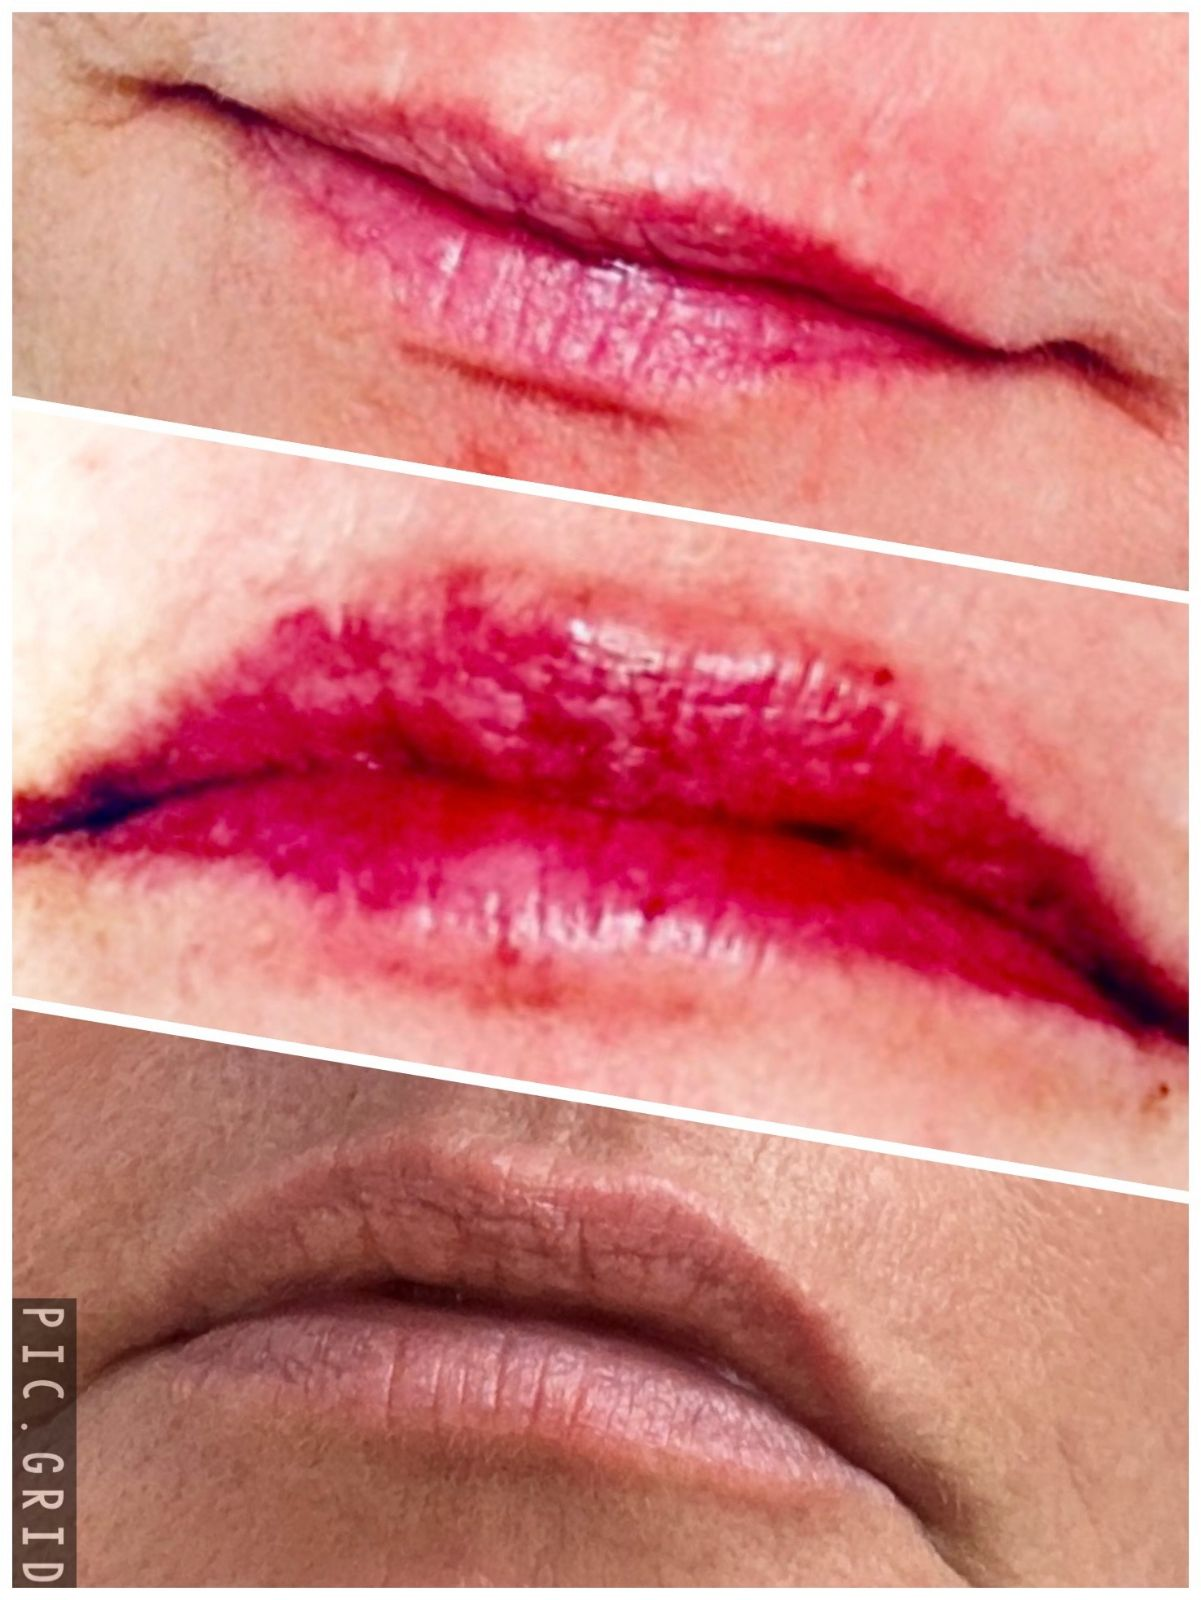 Filler Vobella and  conservative lip augmentation results. 